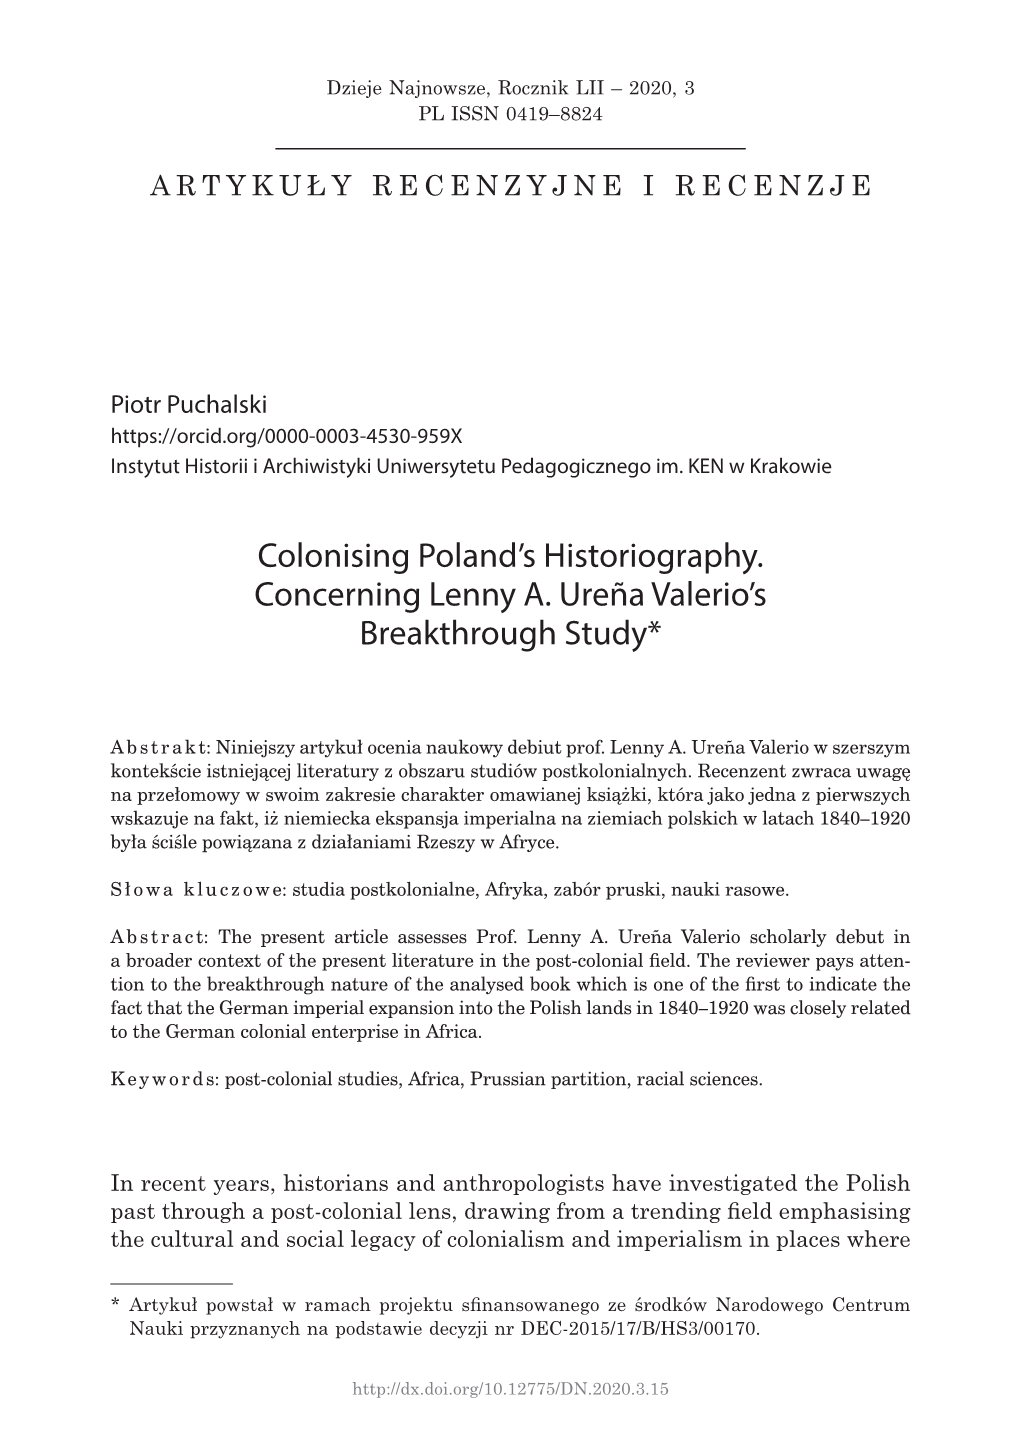 Colonising Poland's Historiography. Concerning Lenny A. Ureńa